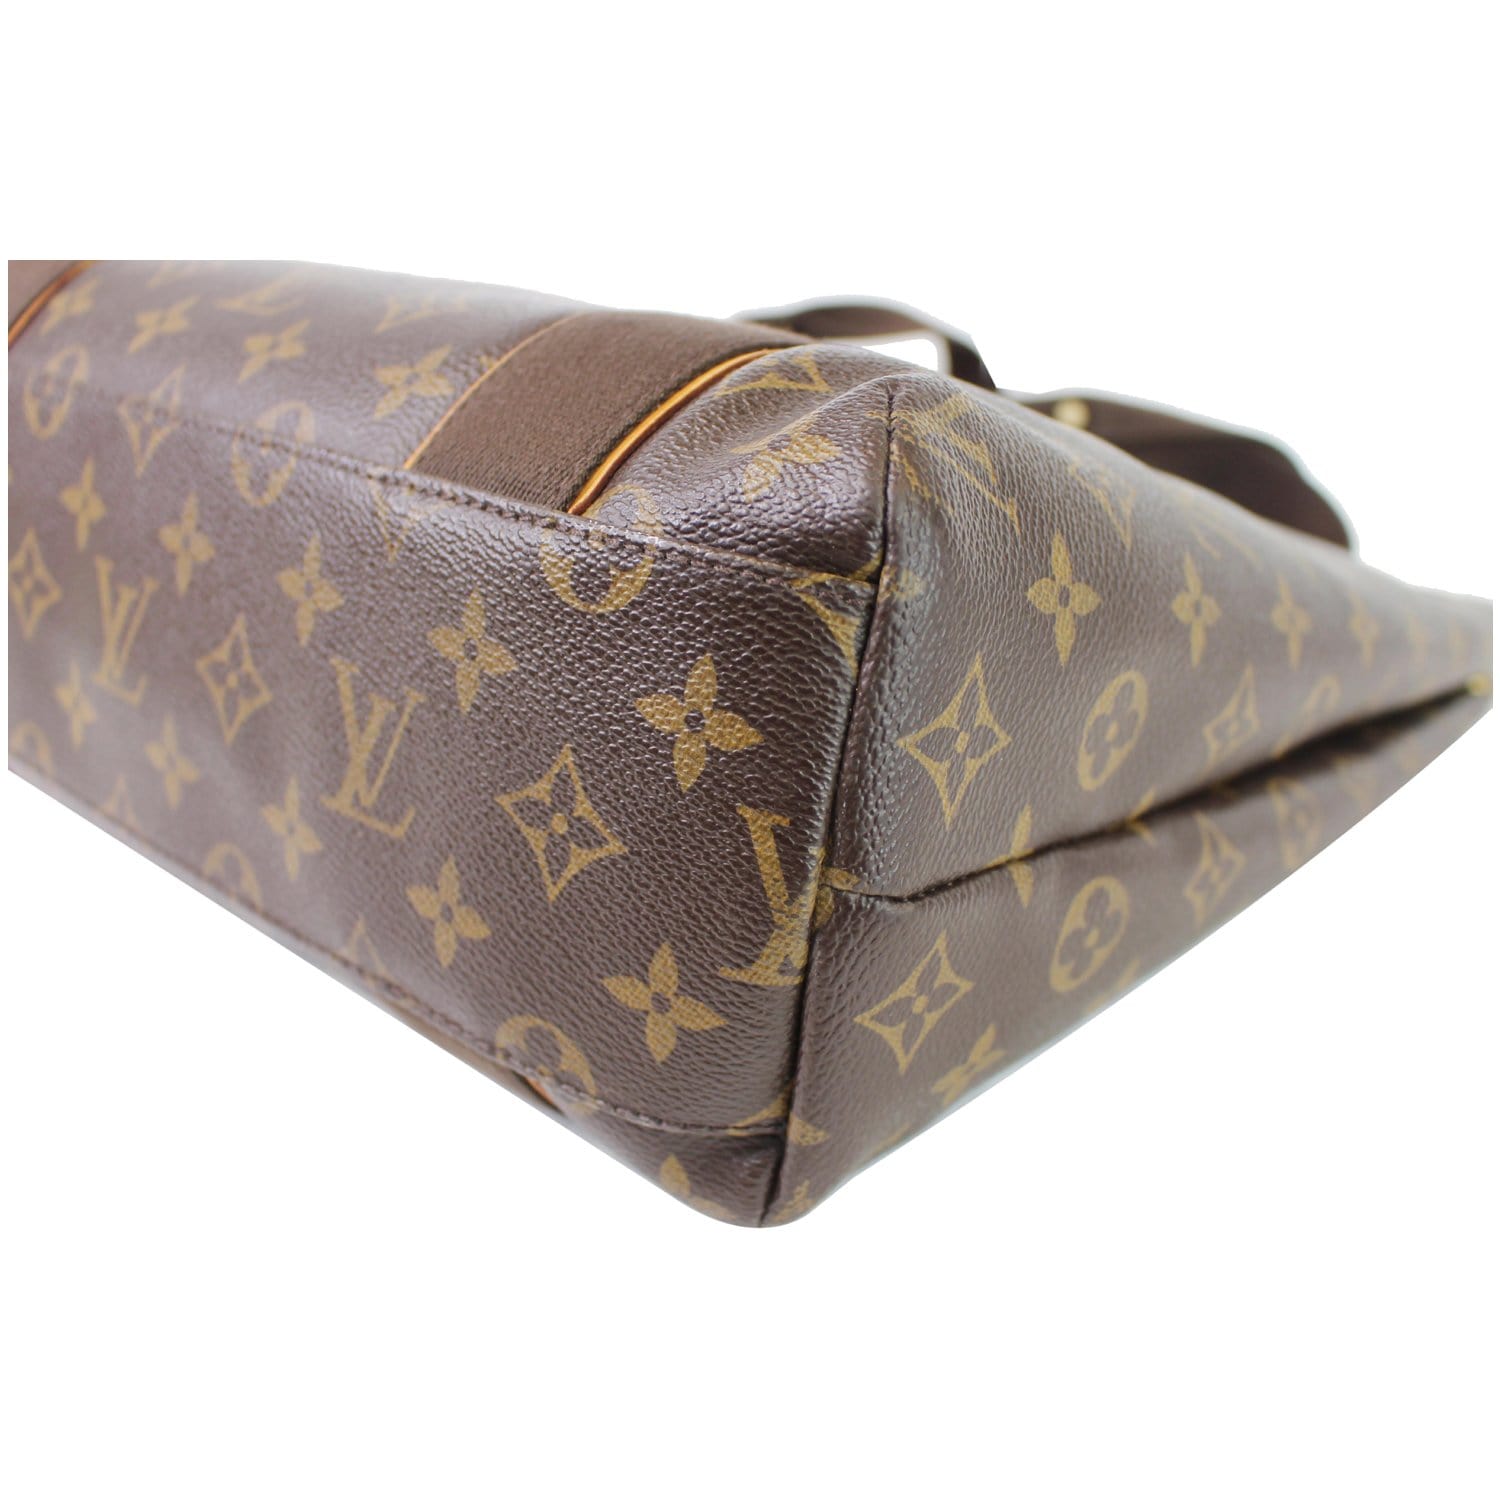 Brown Louis Vuitton Innsbruck Cabas Tote Bag